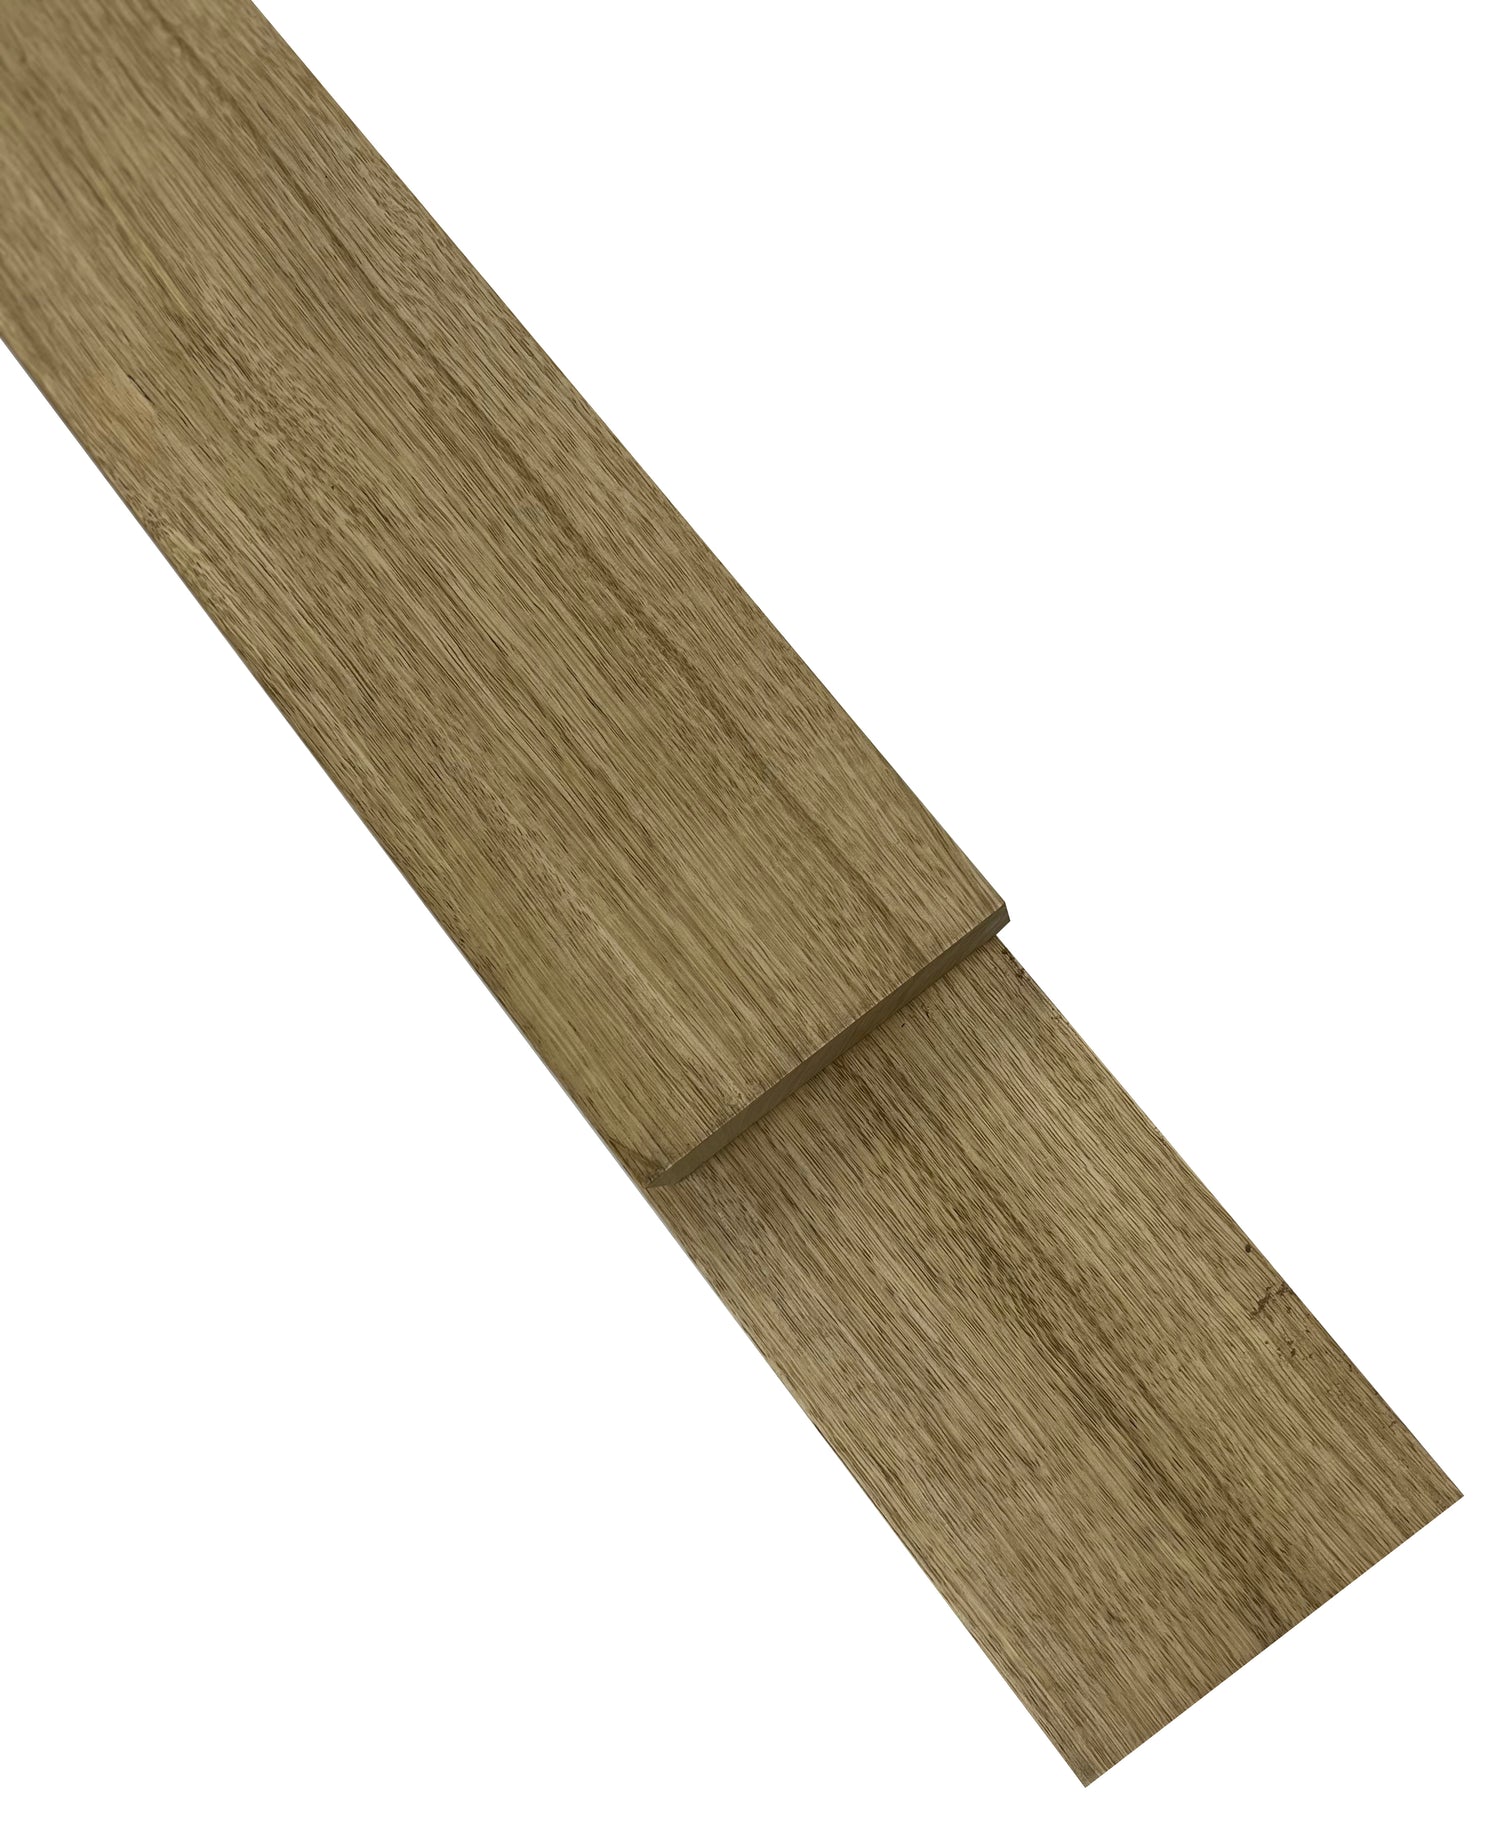 Premium White Limba 8/4 Lumber - Exotic Wood Zone - Buy online Across USA 